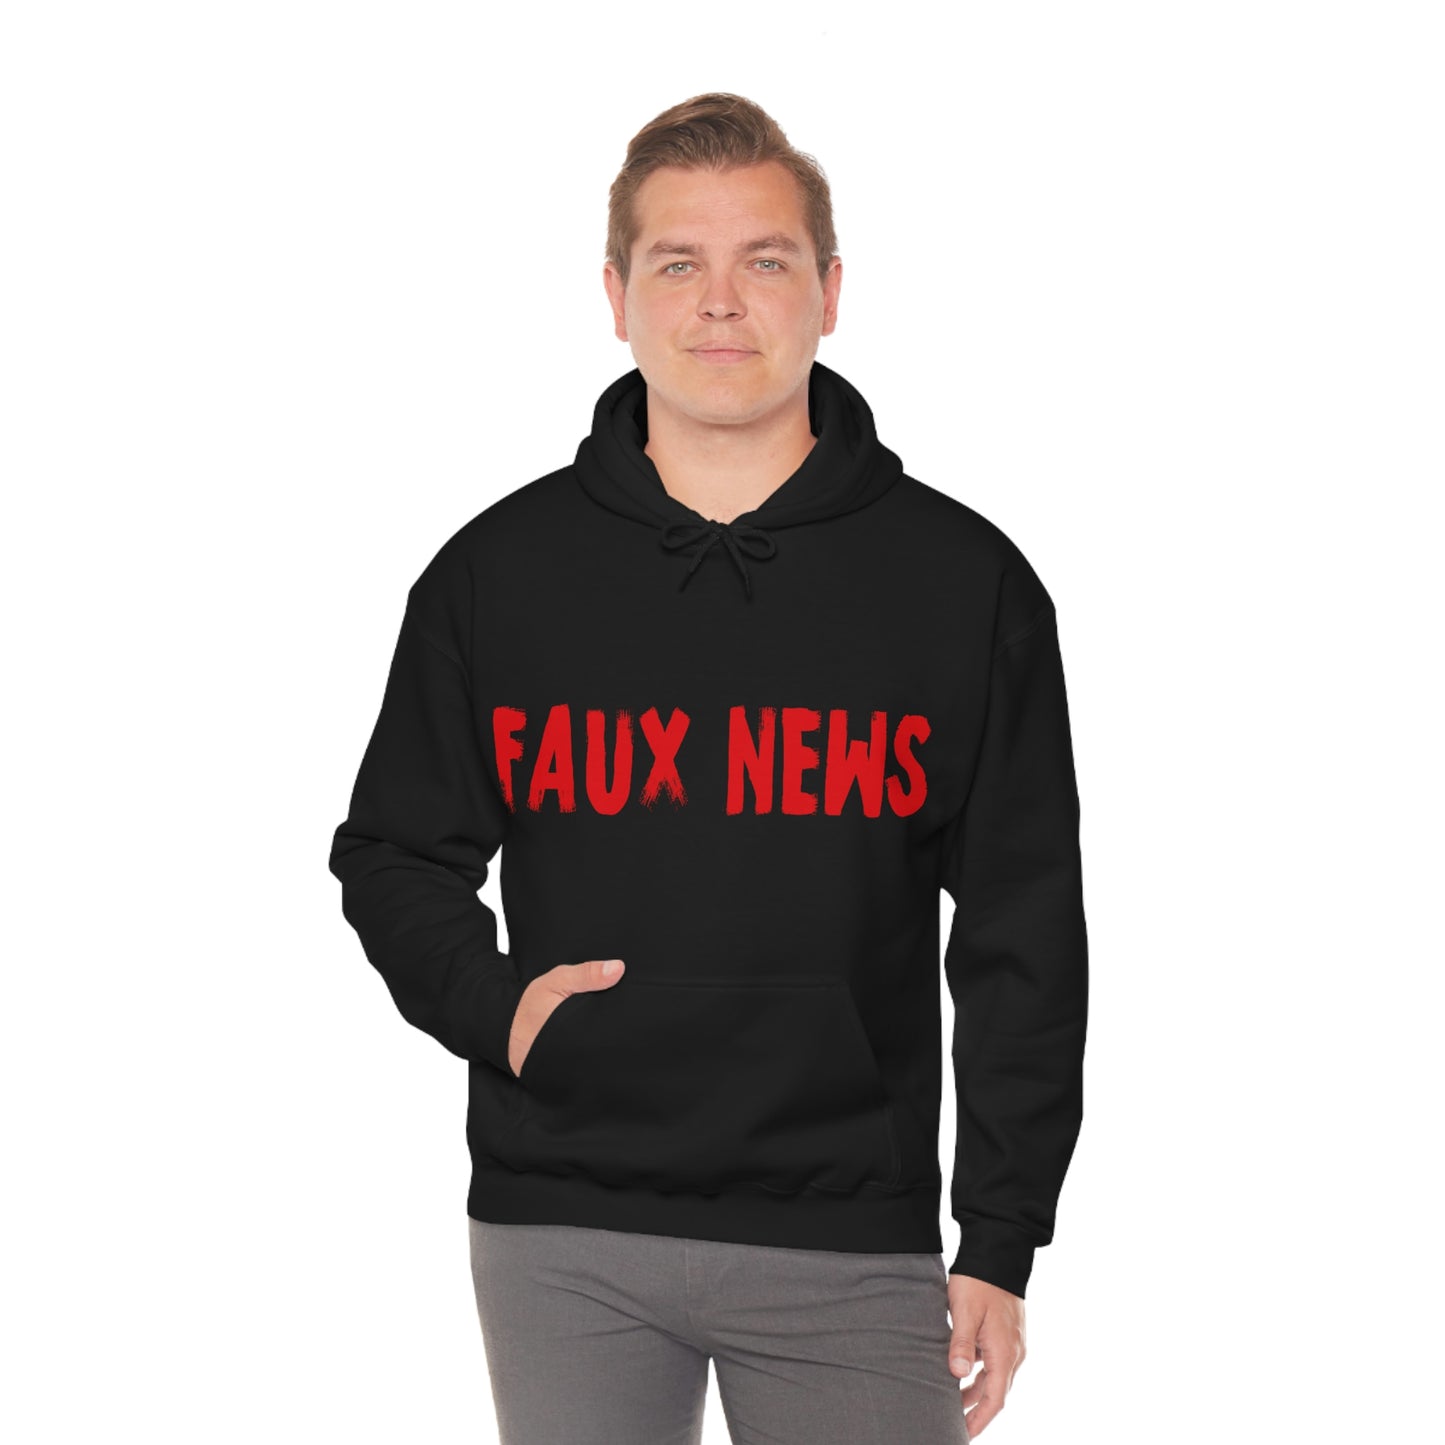 Unisex "Faux News" Hooded Sweatshirt